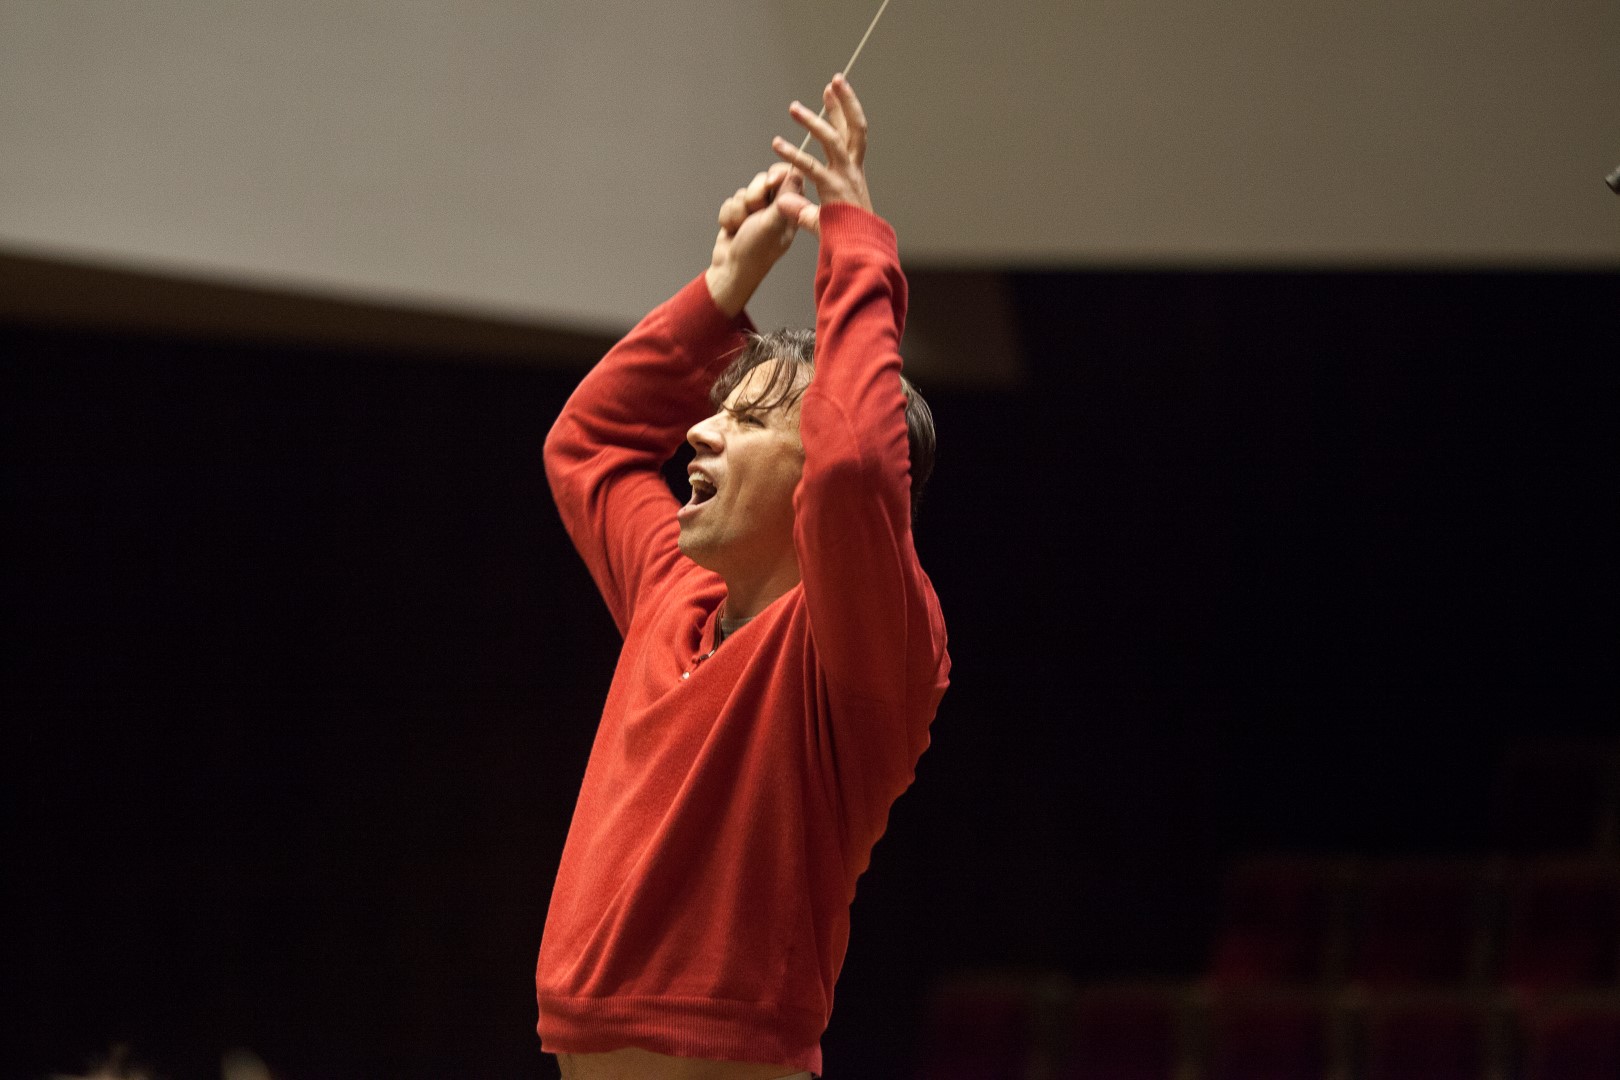 Der estnische Dirigent Kristjan Järvi wird als Start der Szene gefeiert. Bildquelle: Peter Rigaud